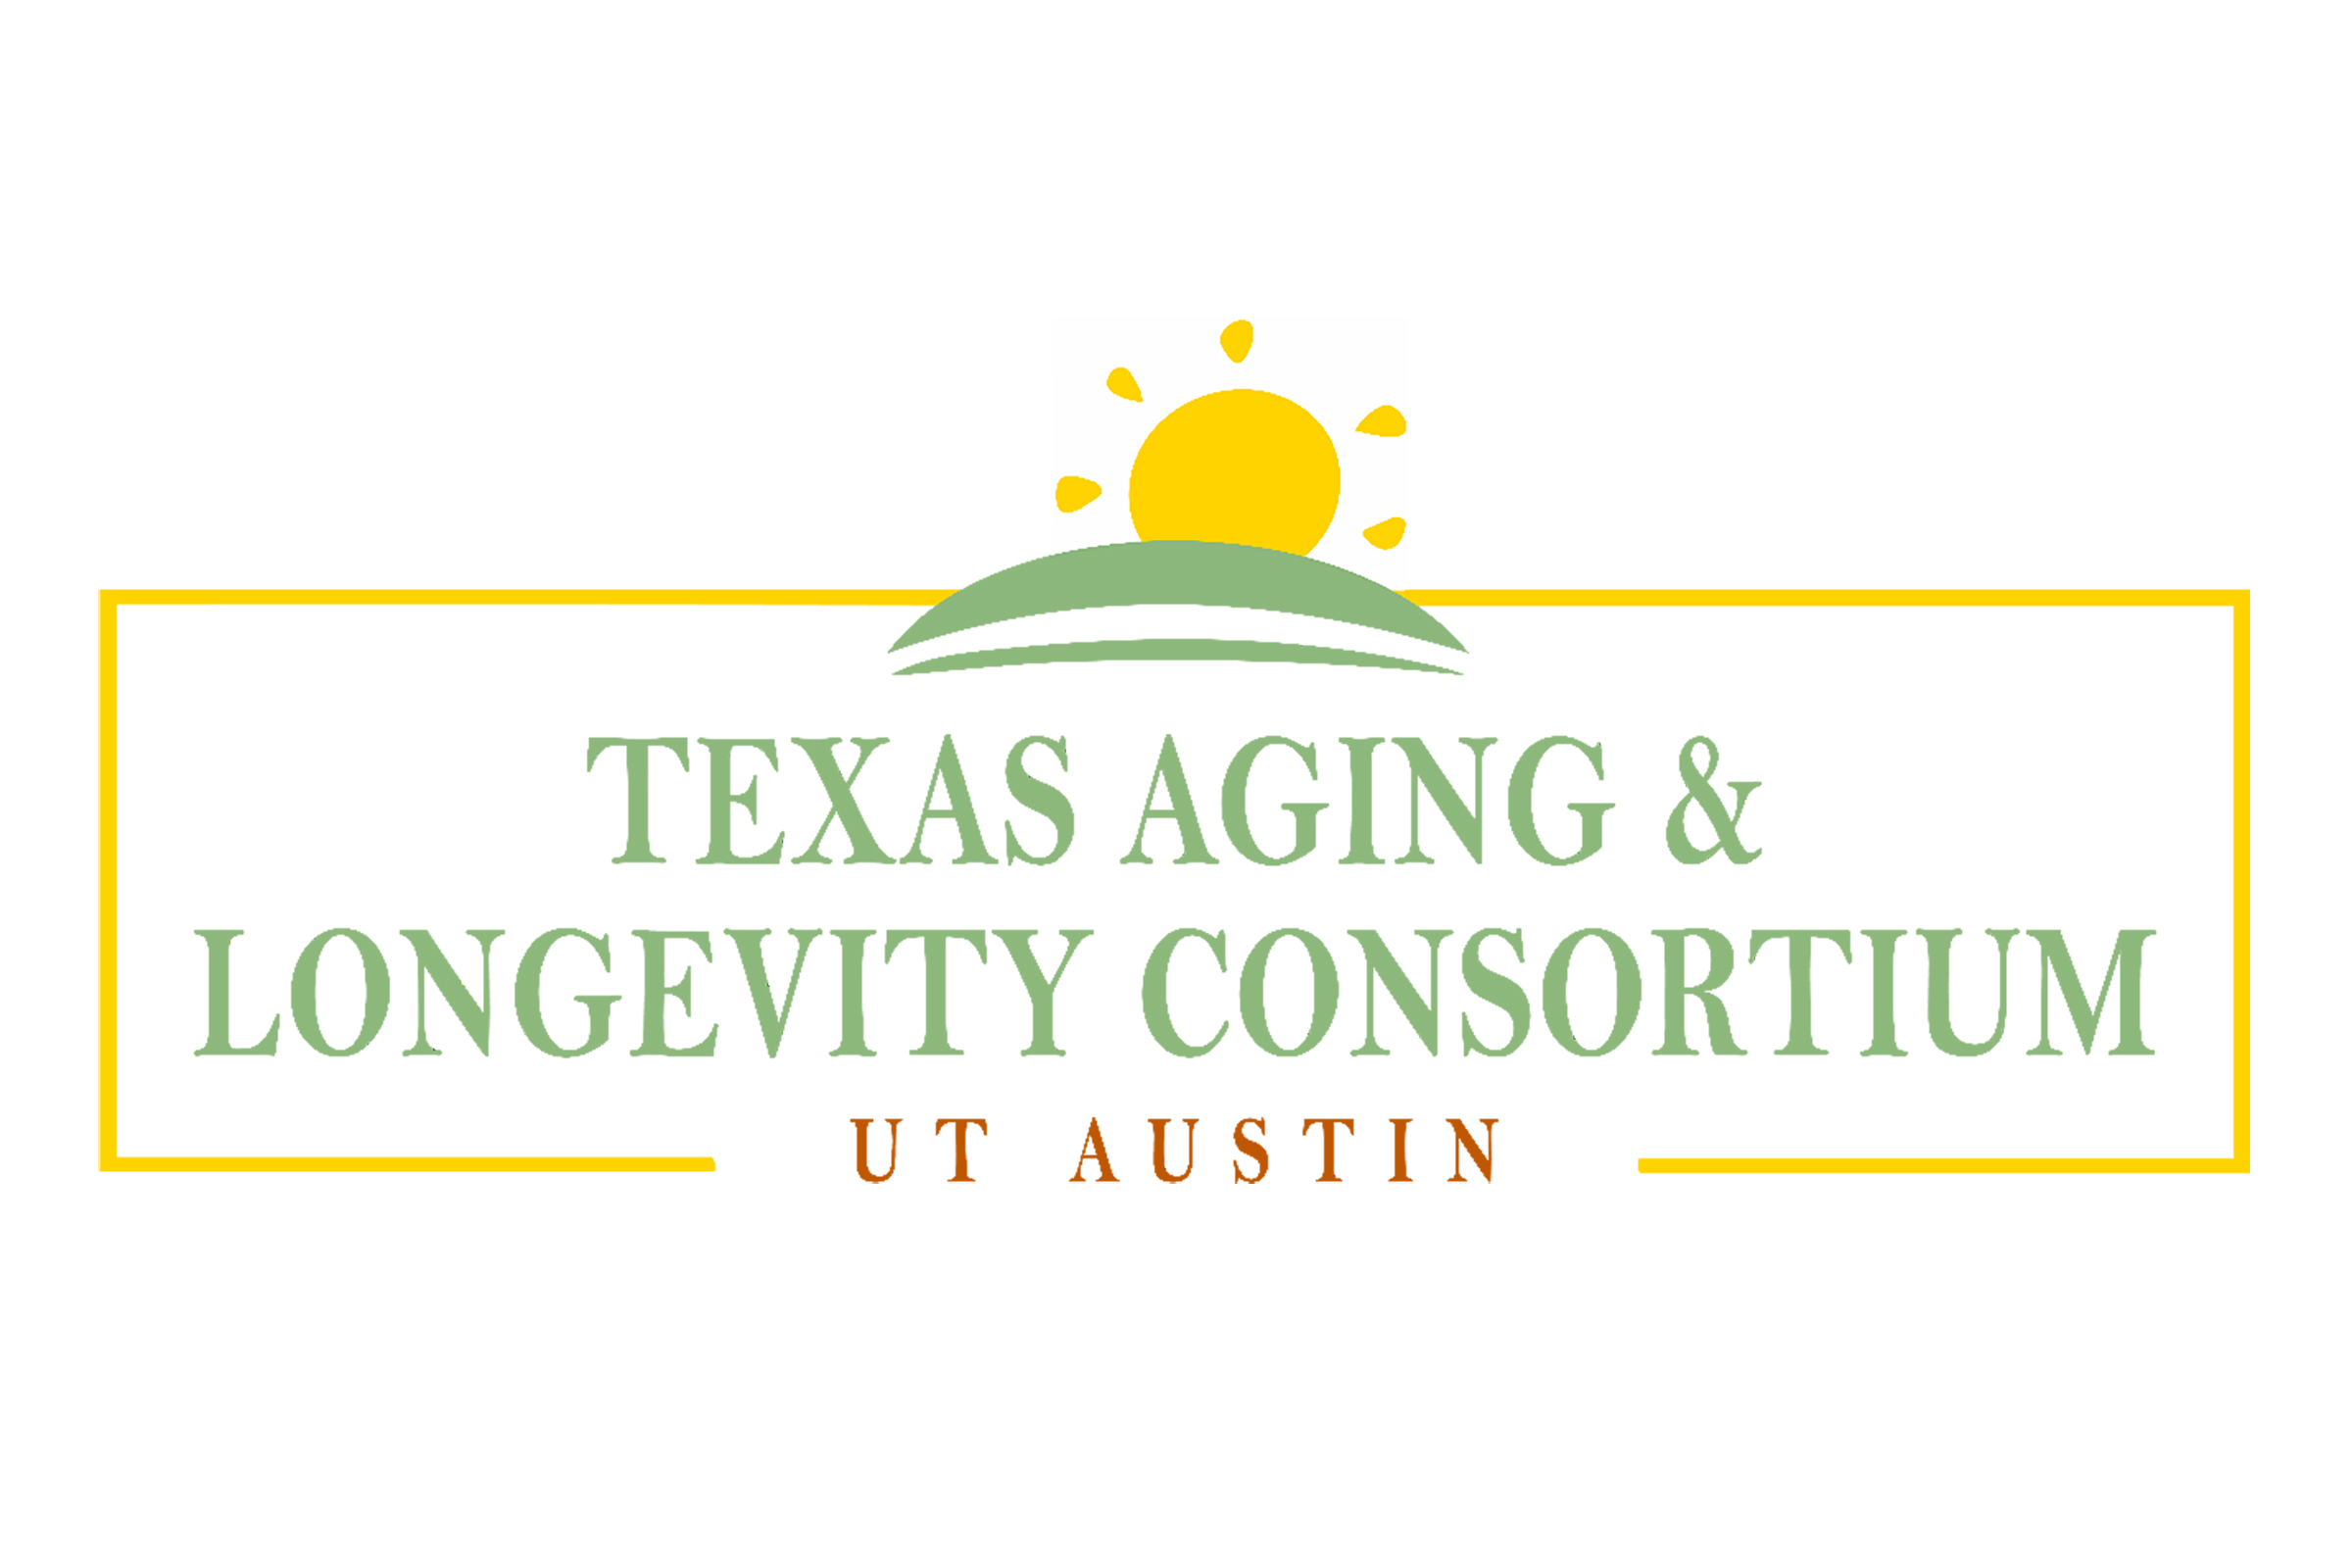 Texas Aging and Longevity Consortium